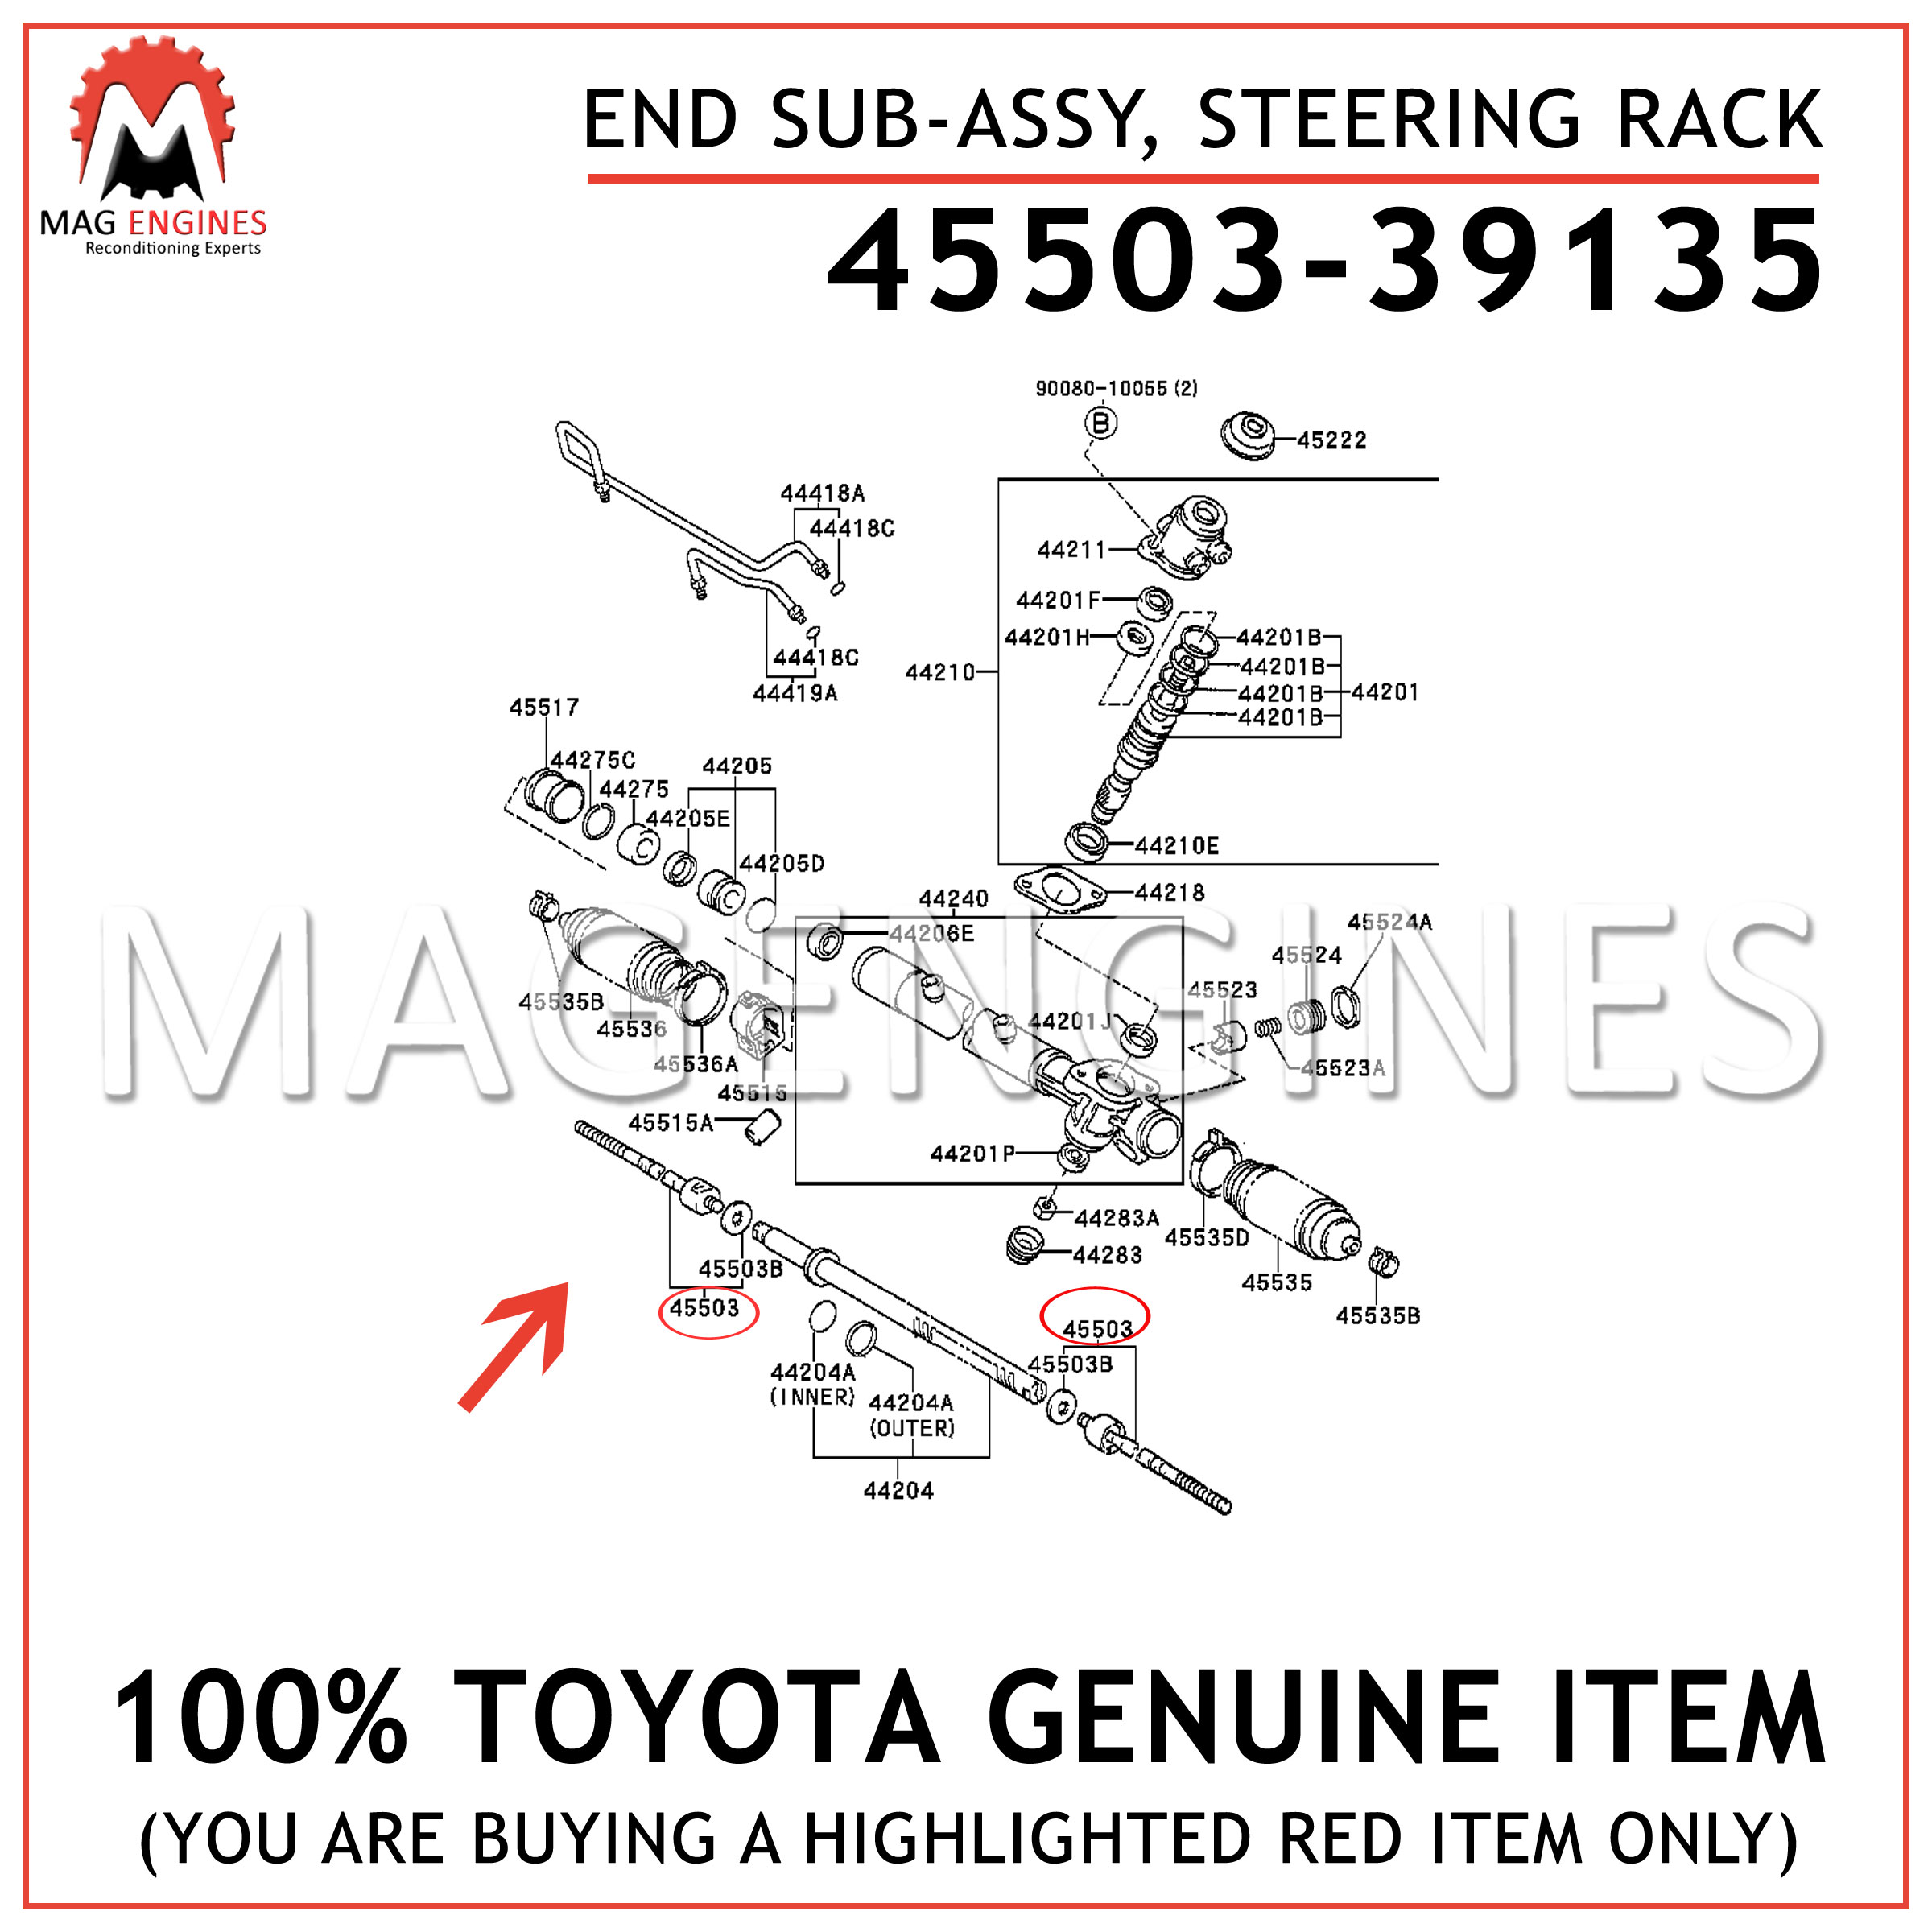 STEERING RACK 45503-39225 4550339225 Genuine Toyota END SUB-ASSY